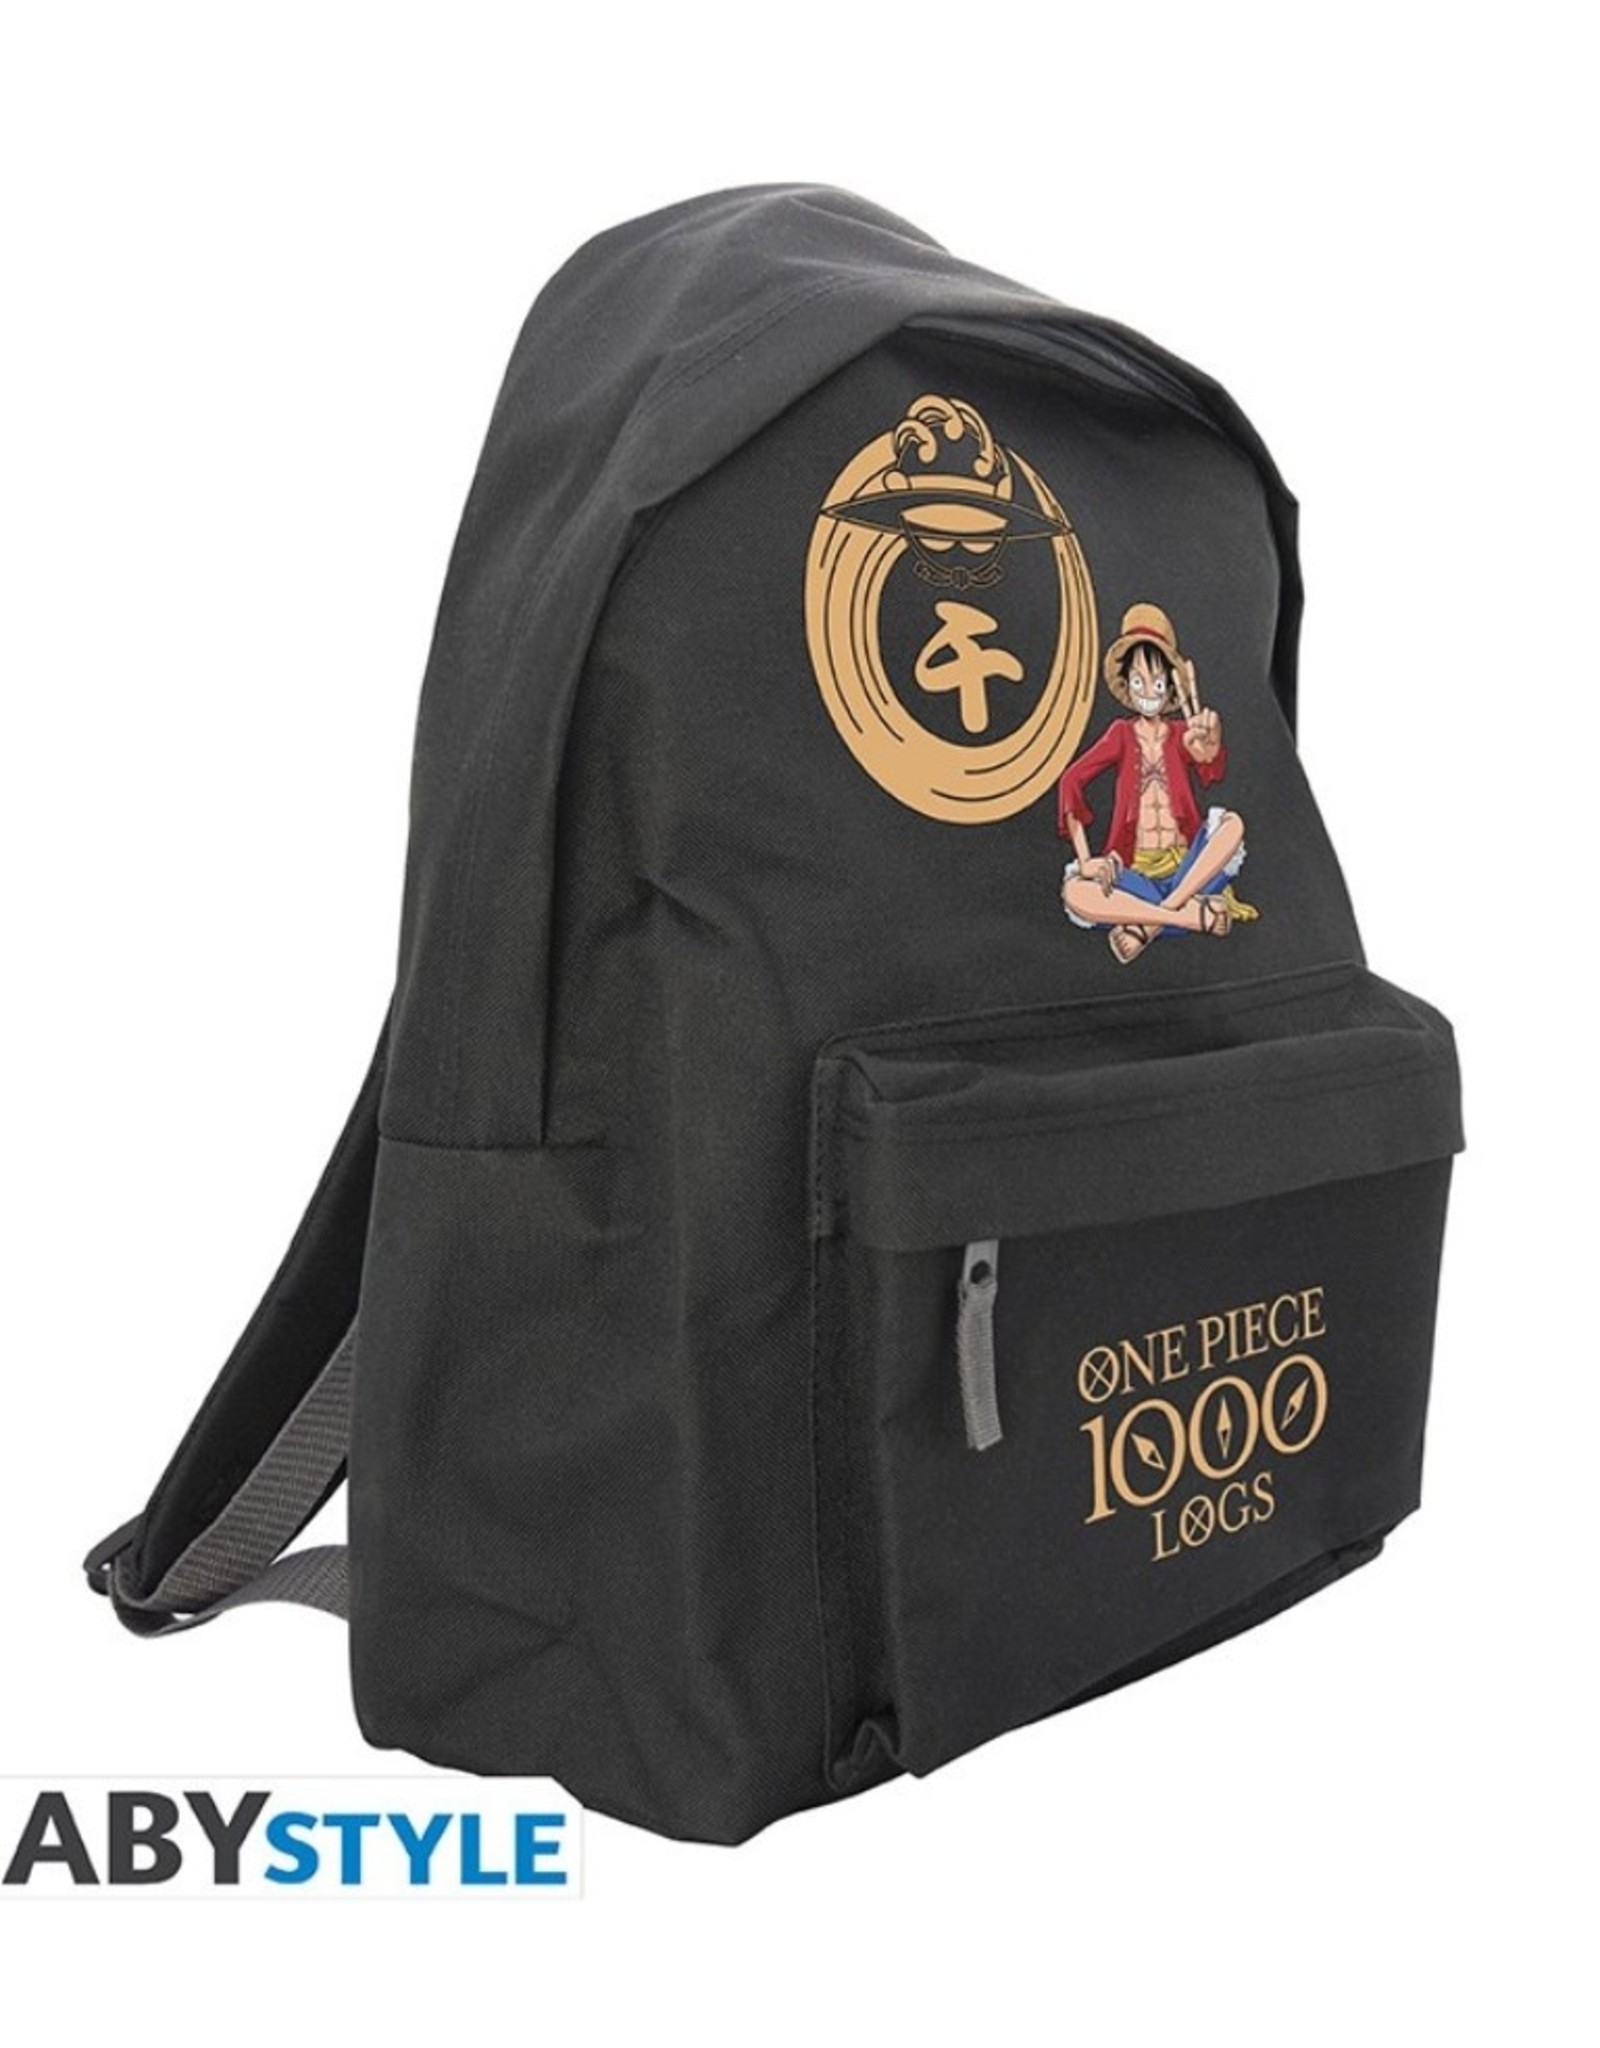 Friends Merchandise - One Piece Backpack Luffy 1000 Logs